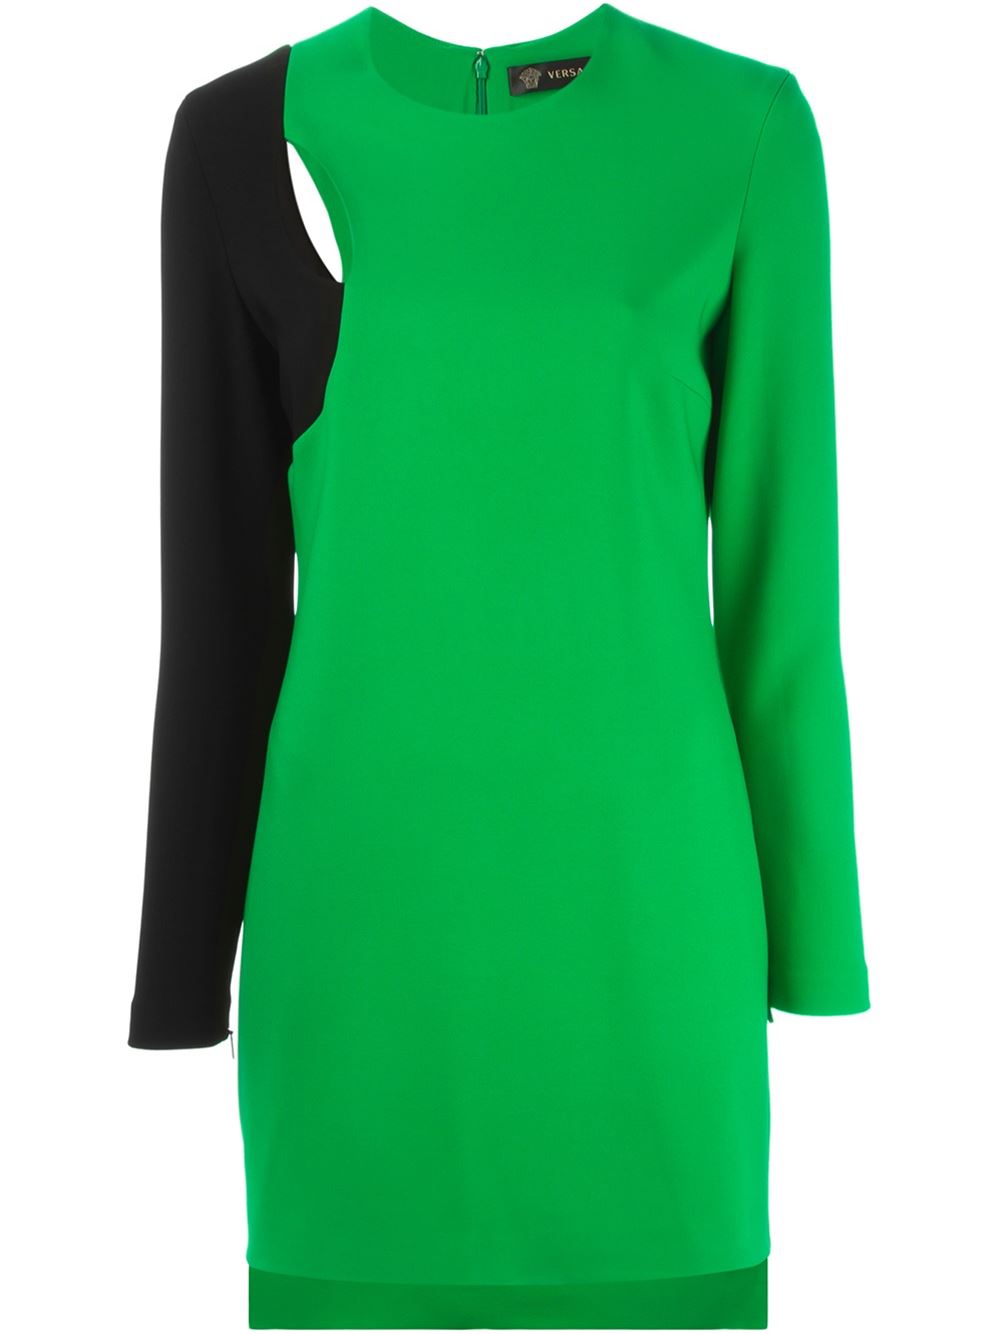 green and black long sleeve dress